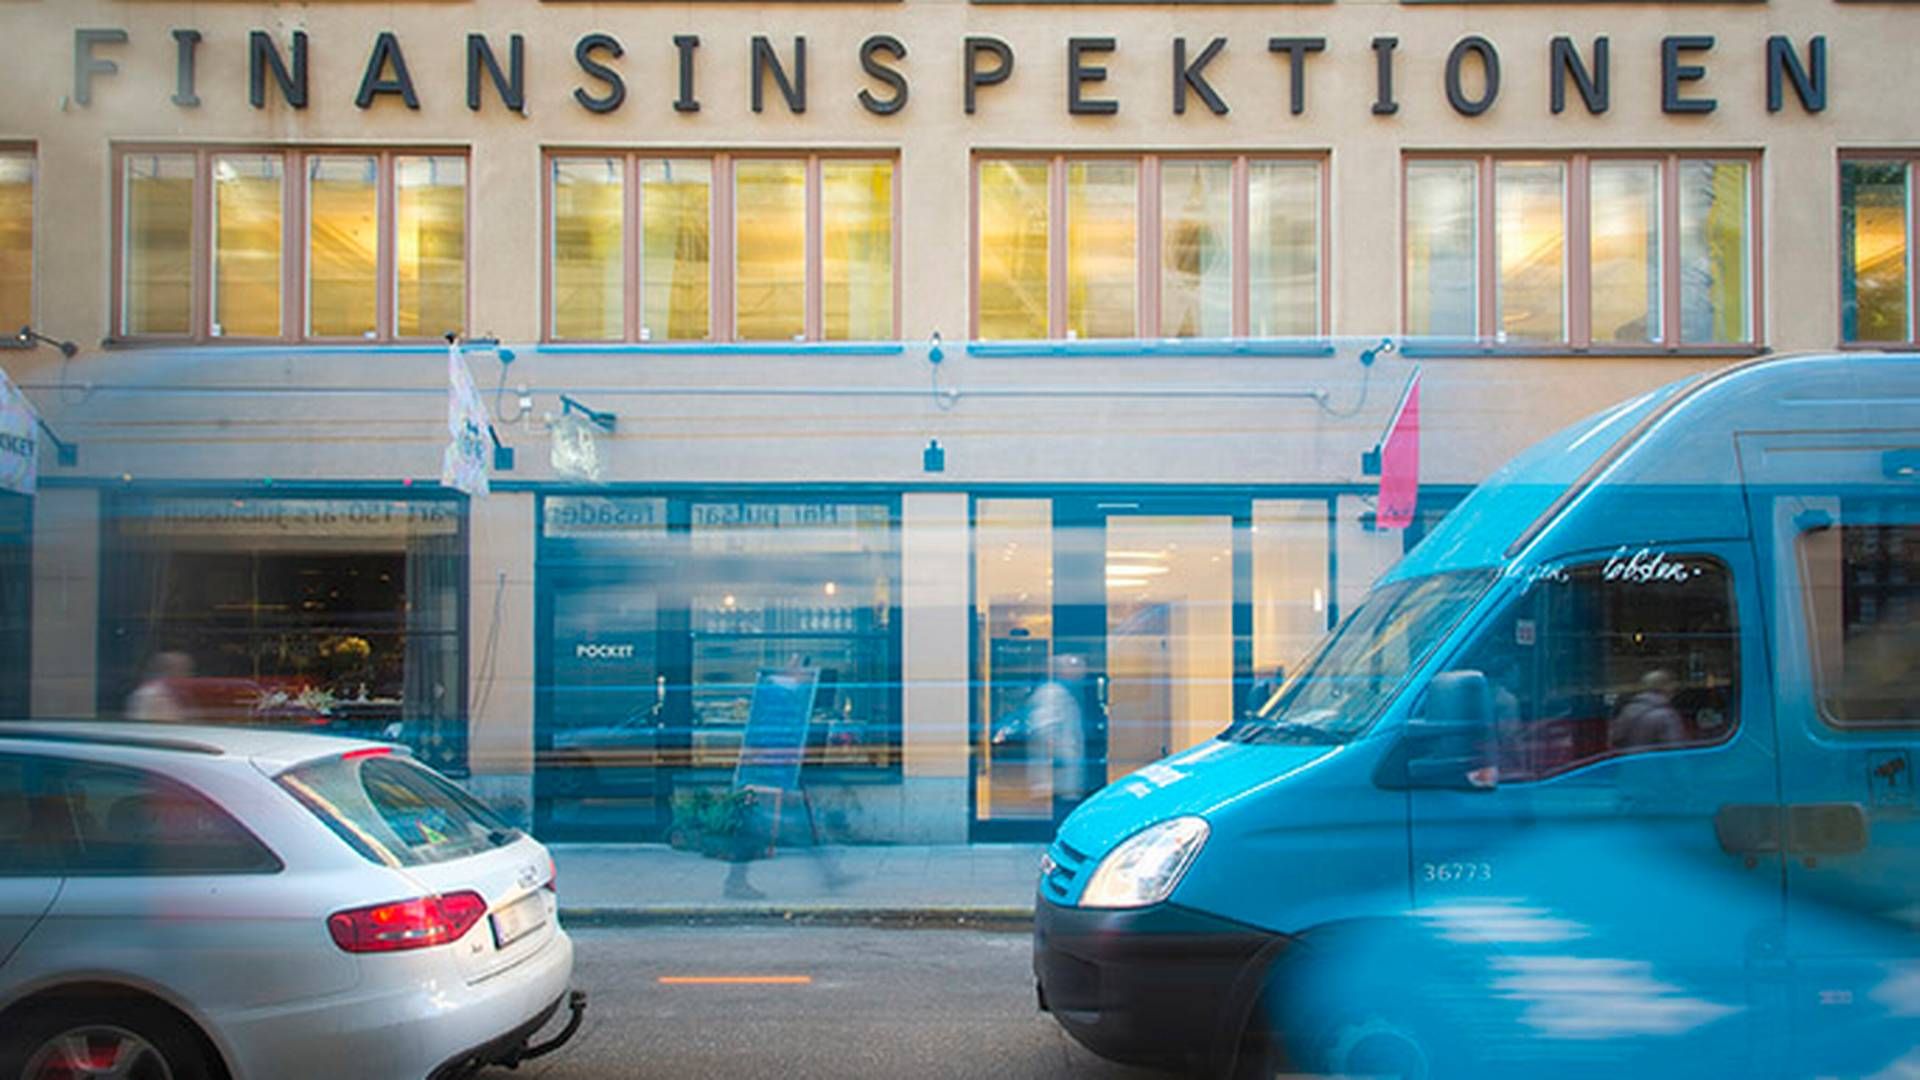 Finansinspektionen er Sveriges pendant til Finanstilsynet. | Foto: https://www.fi.se/en/about-fi/